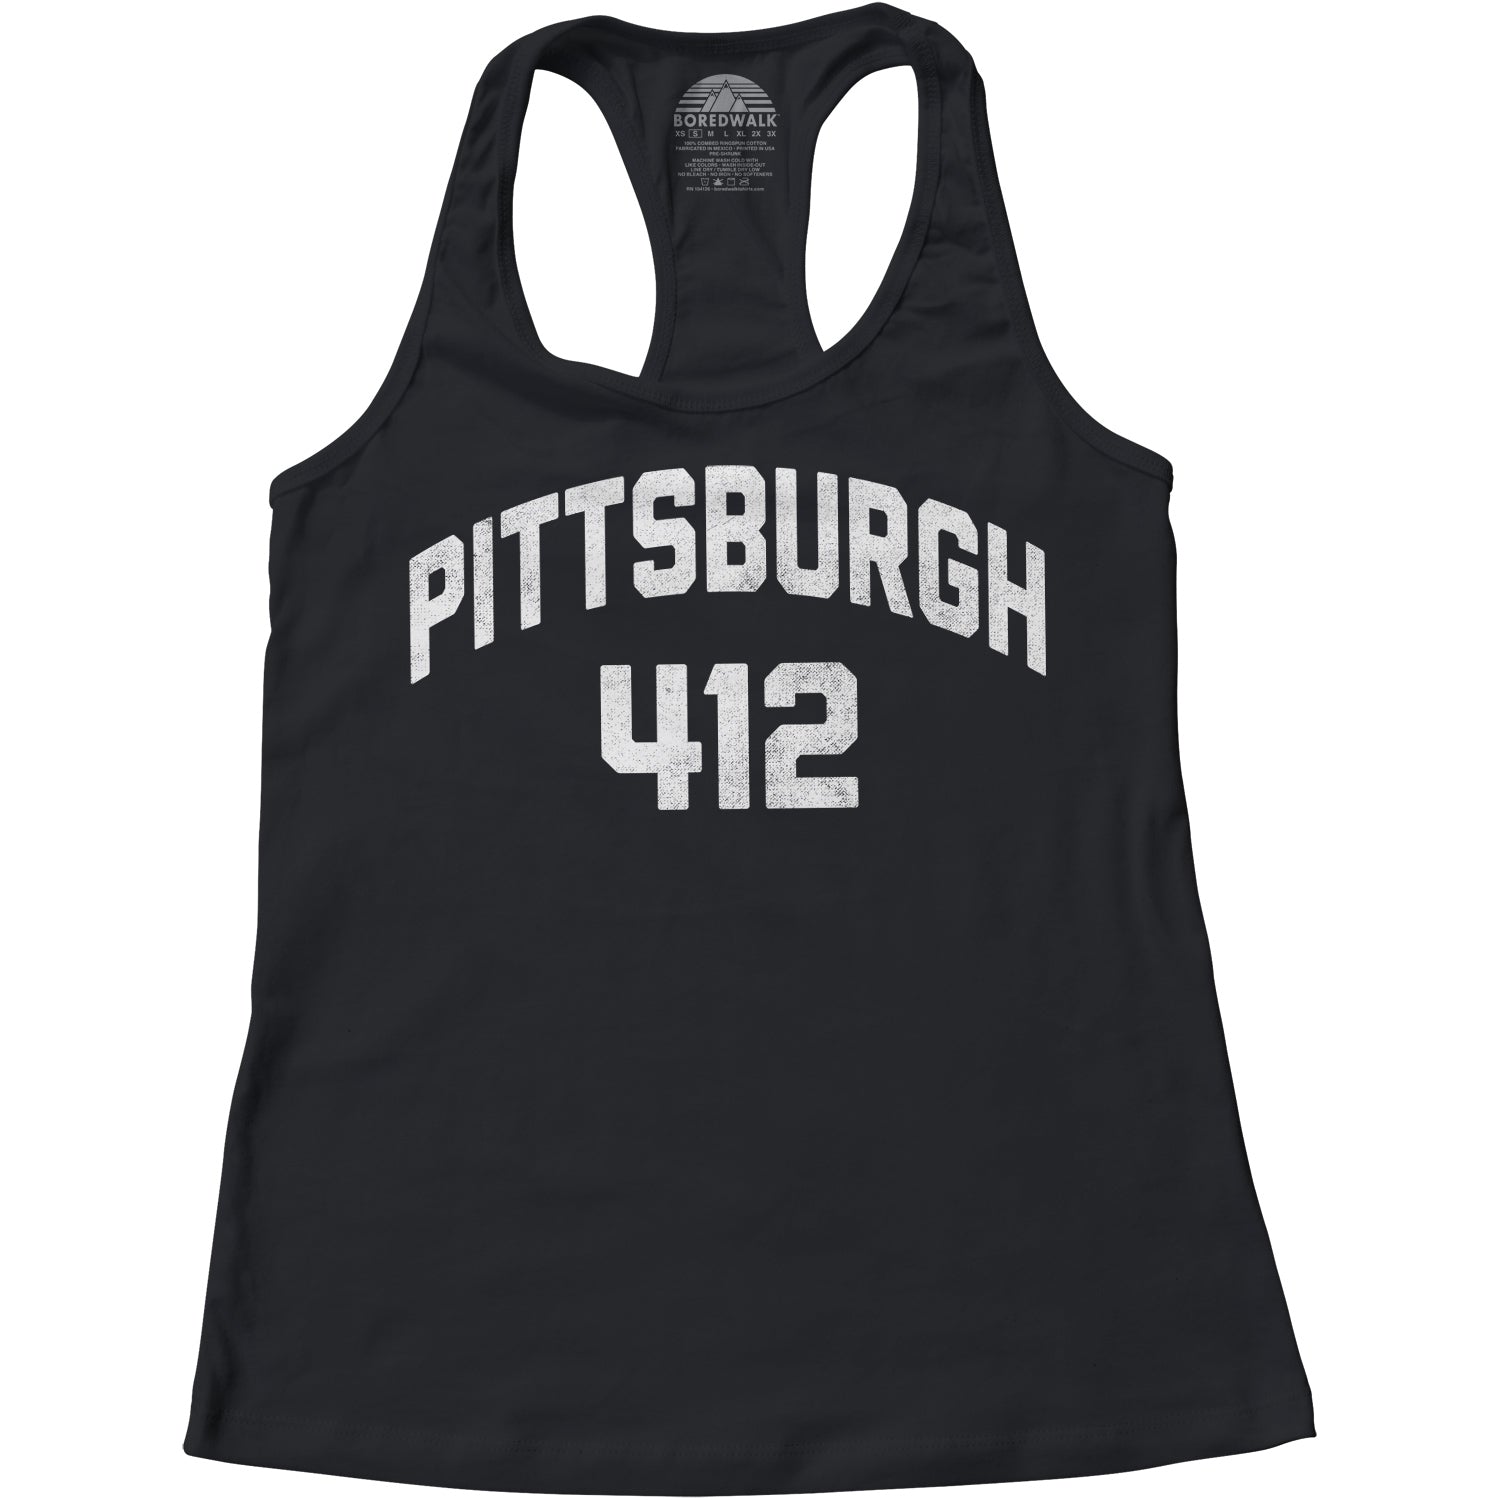 Women's Pittsburgh 412 Area Code Scoop Neck T-Shirt - Boredwalk